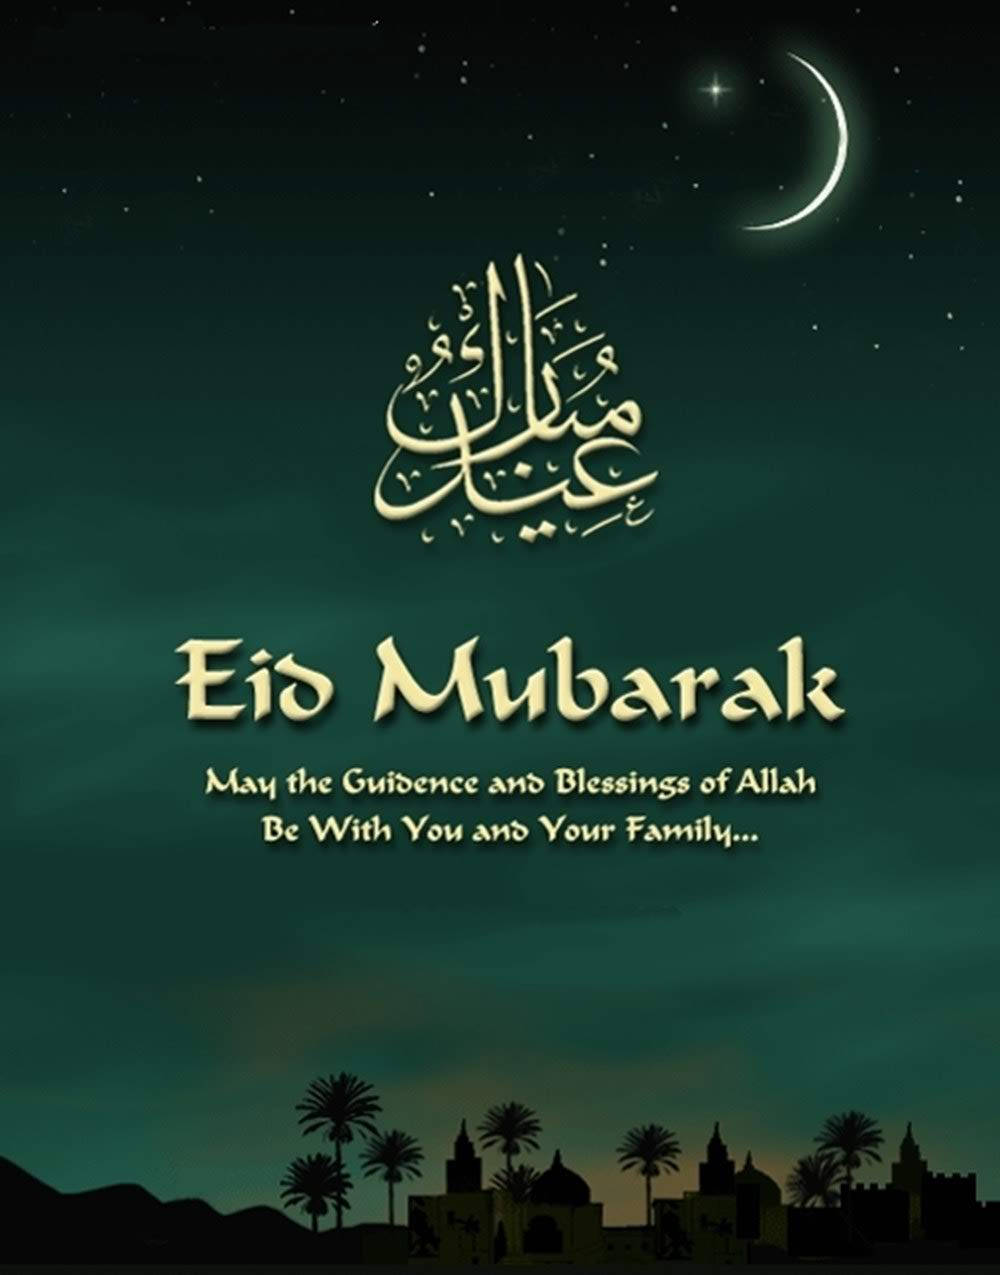 Celebration Of Faith - Eid Mubarak